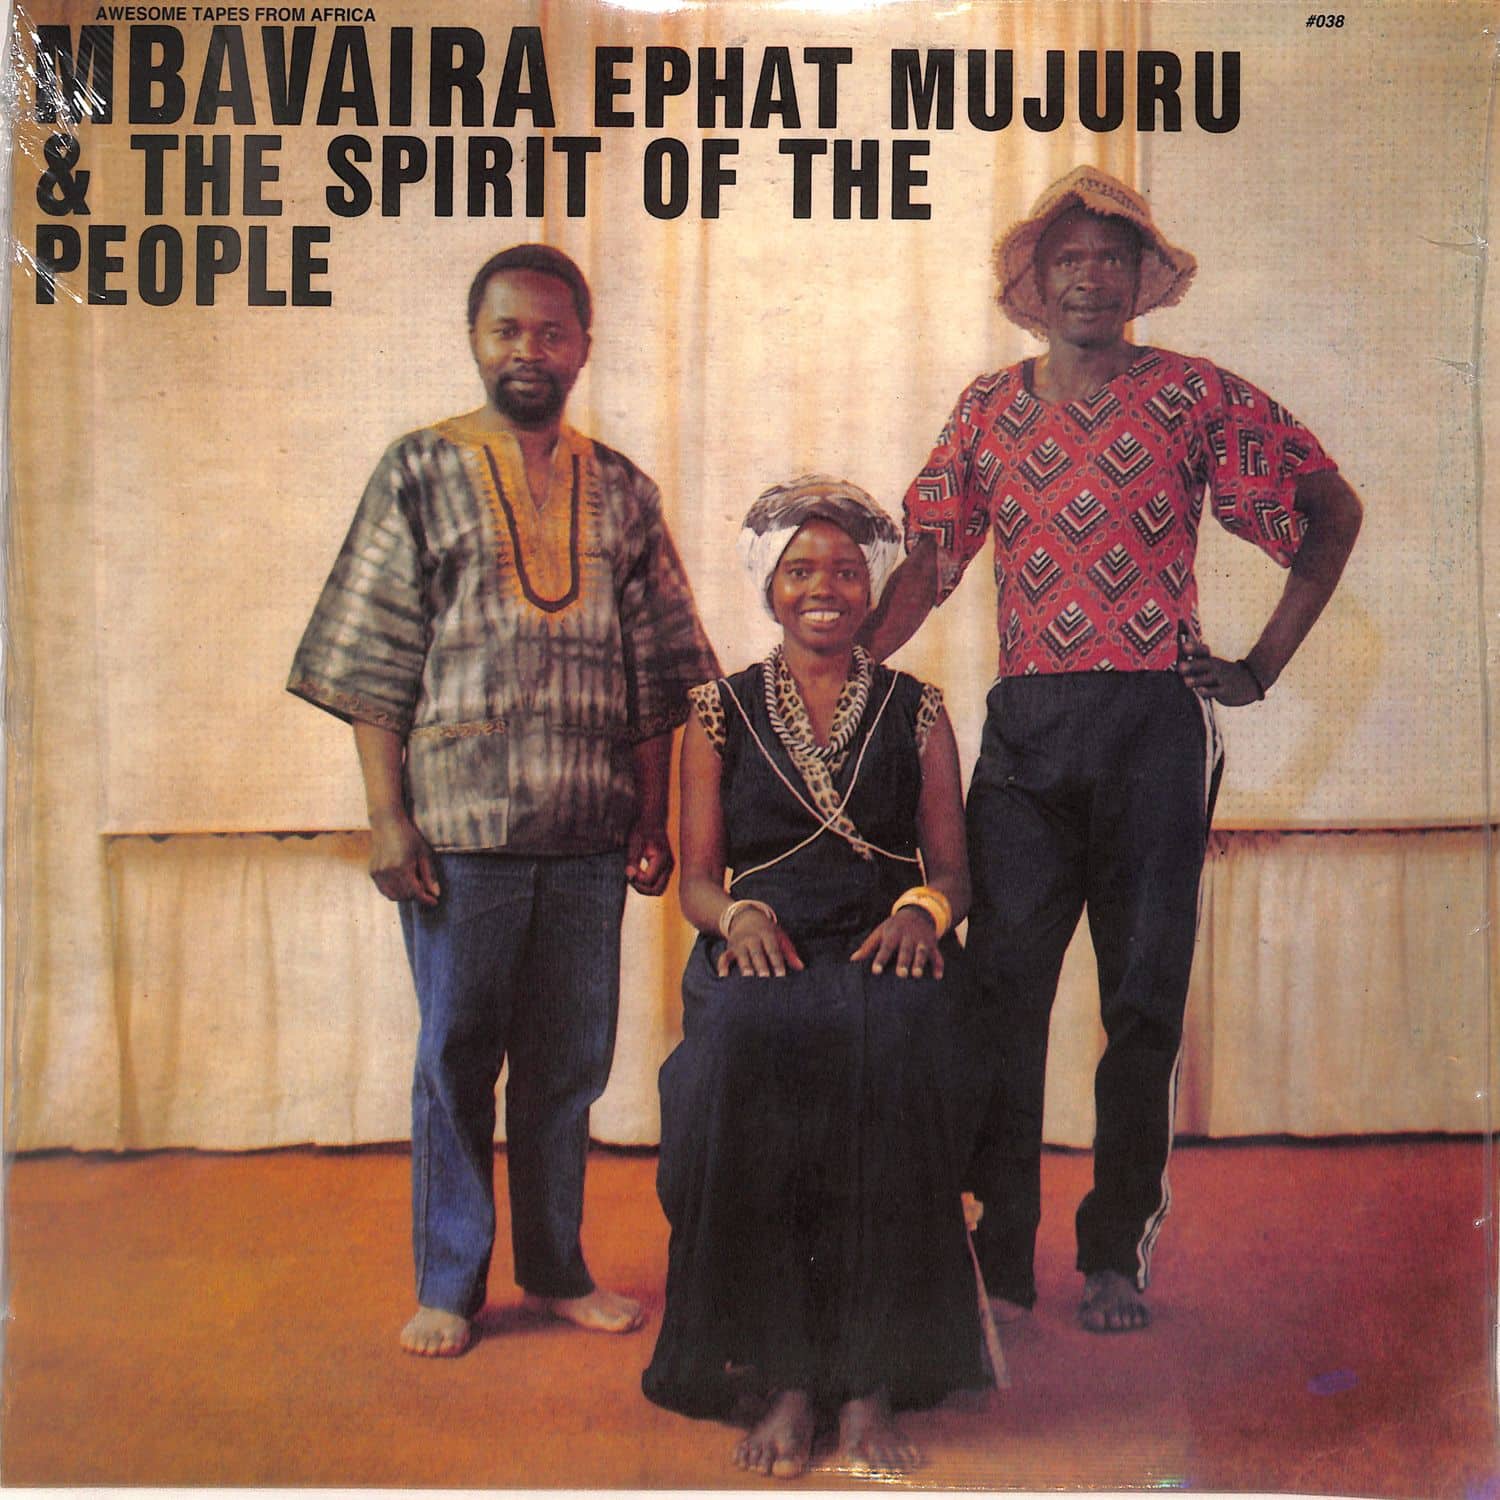 Ephat Mujuru & The Spirtit Of The People - MBAVAIRA 